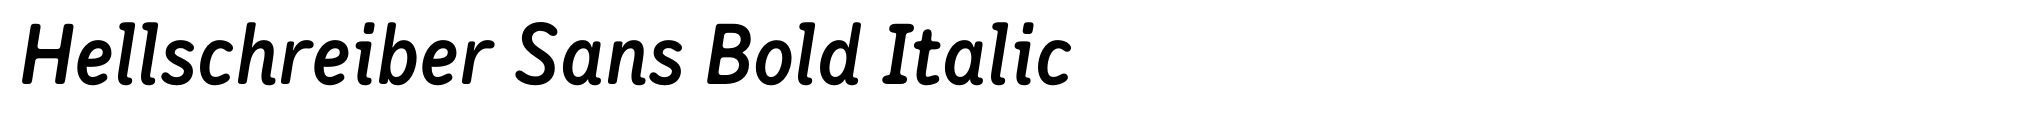 Hellschreiber Sans Bold Italic image